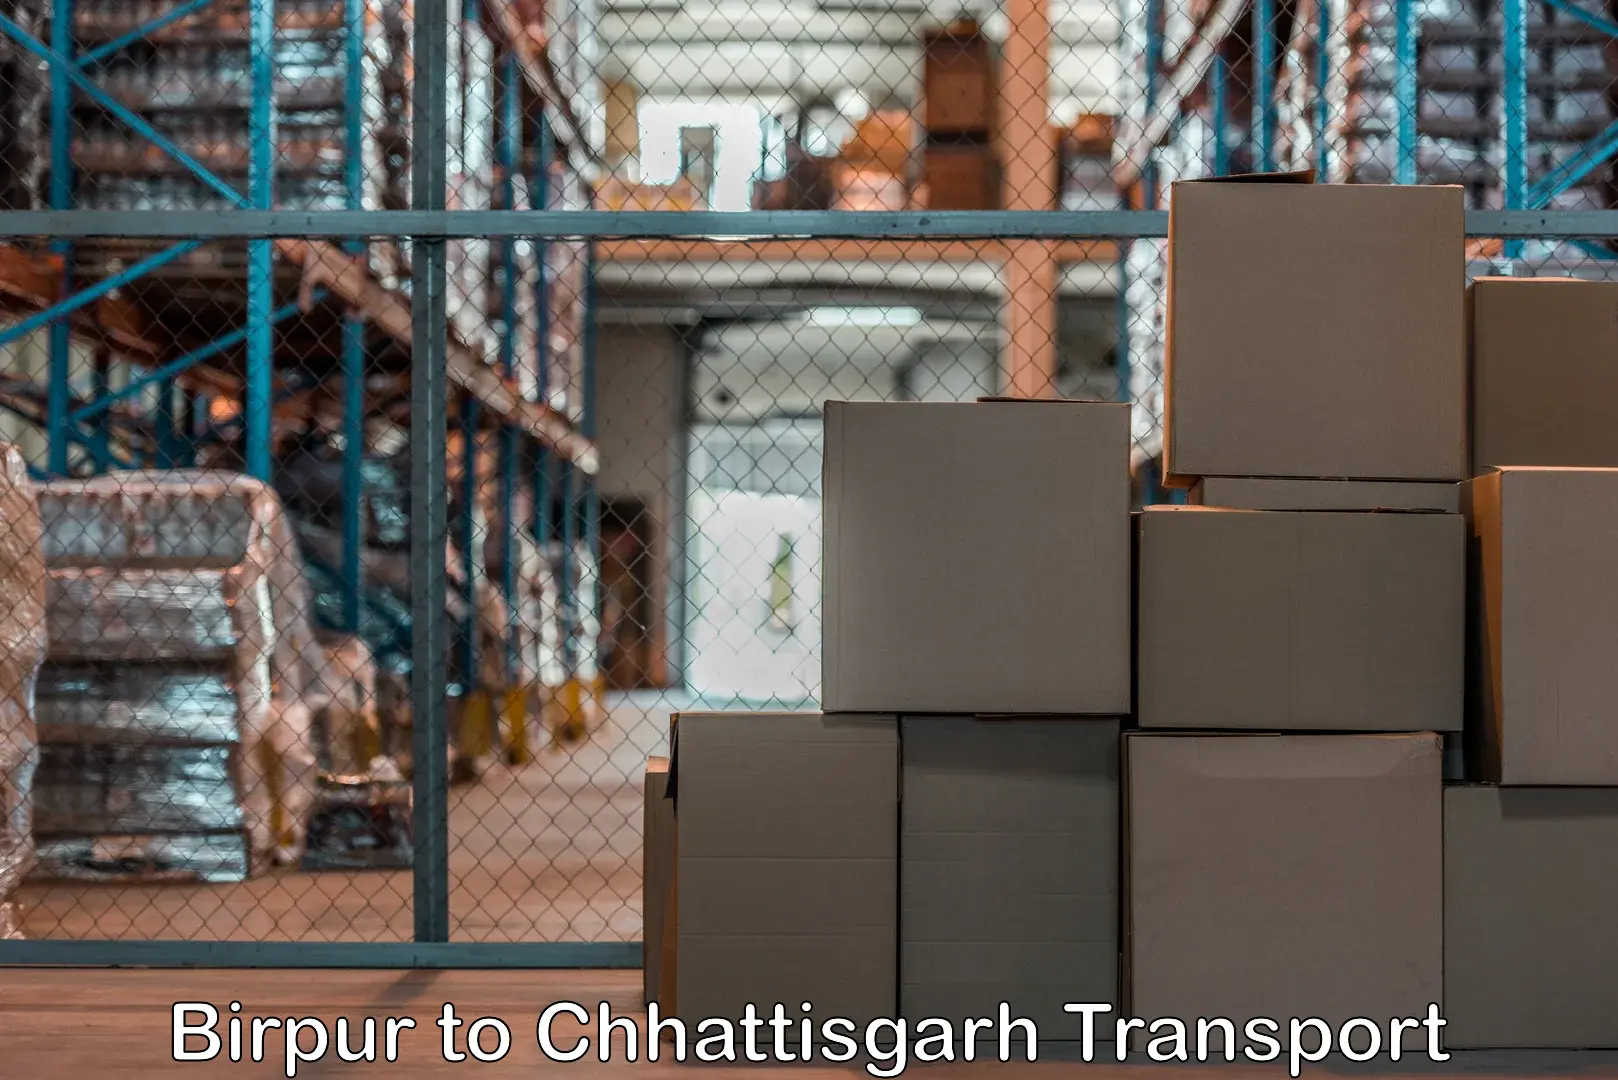 Truck transport companies in India Birpur to Chhattisgarh